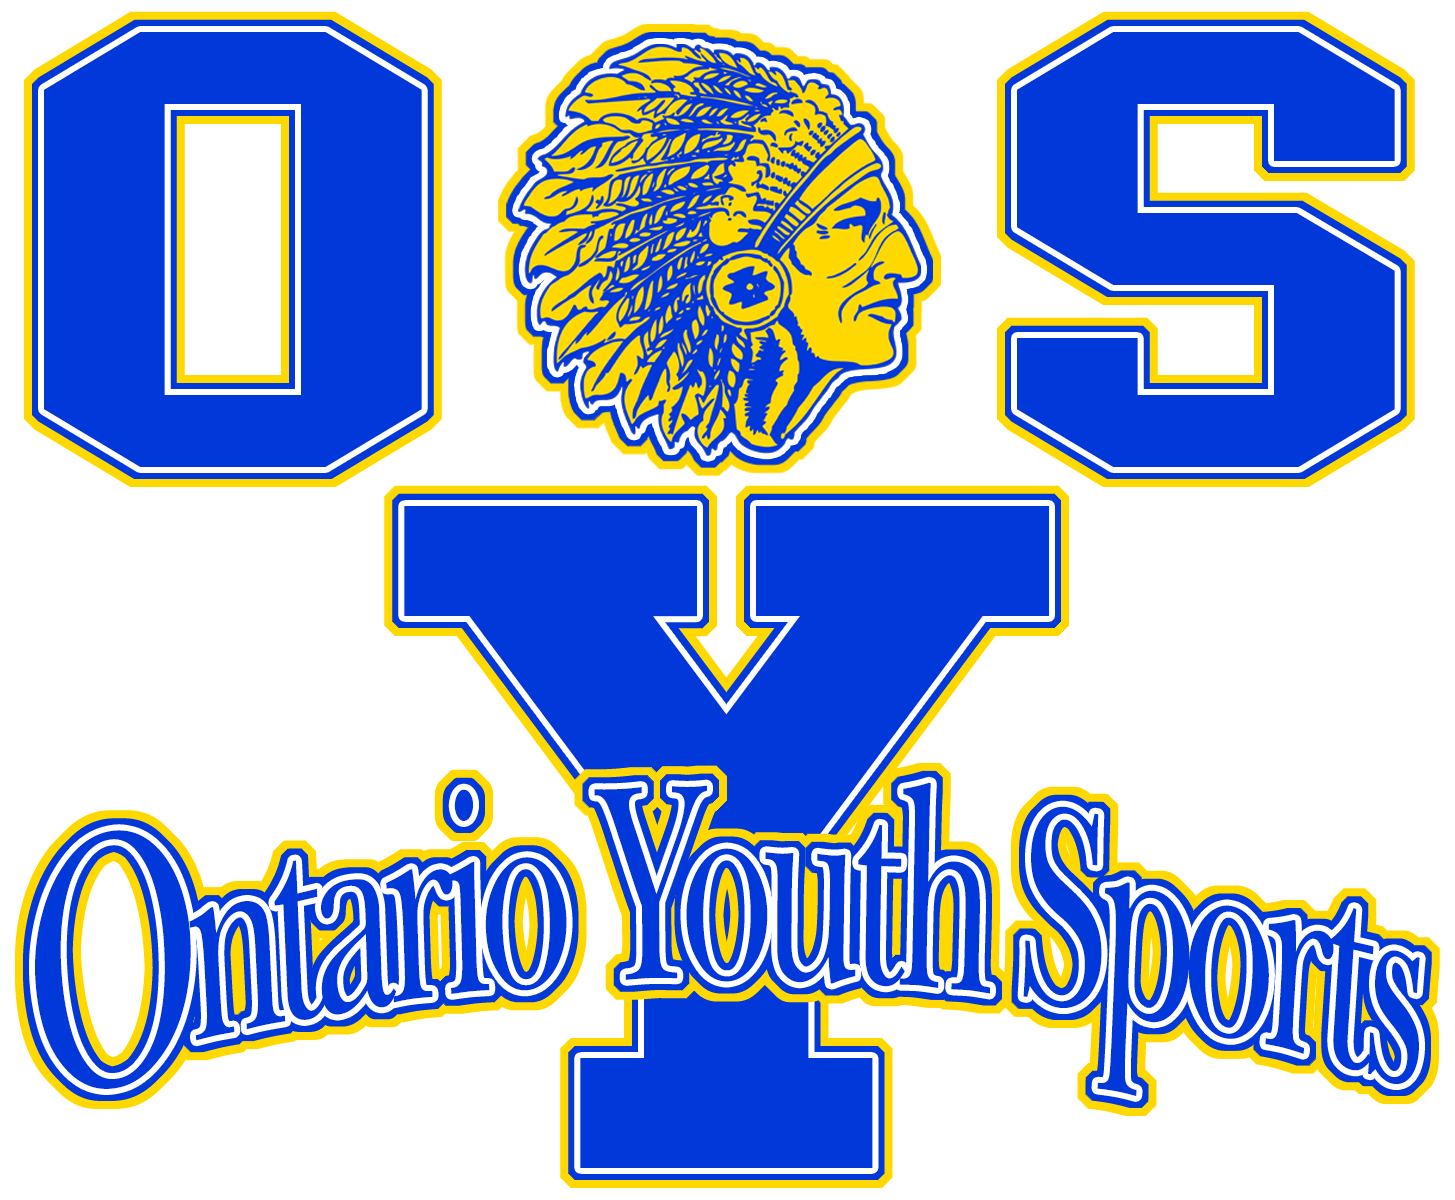 OYS Logo